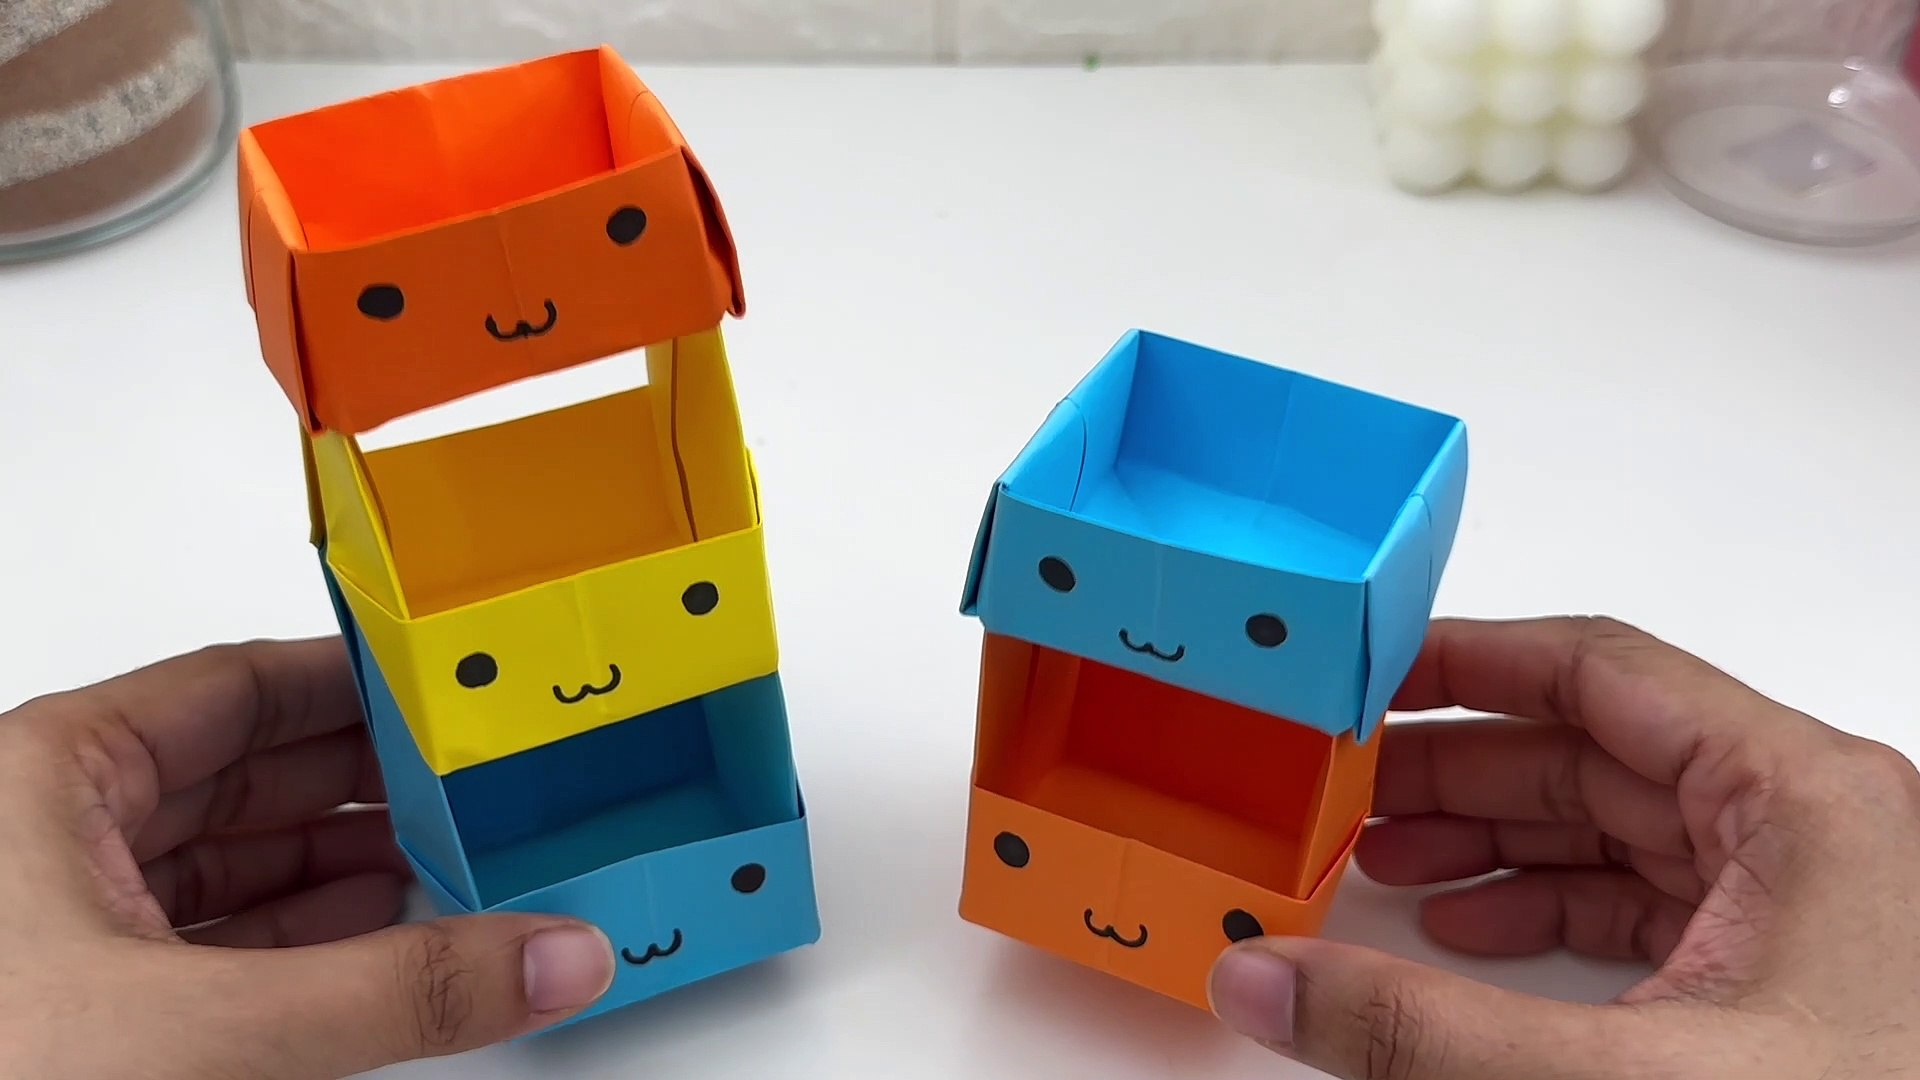 Easy Origami Tissue Box, DIY MINI PAPER TISSUE BOX